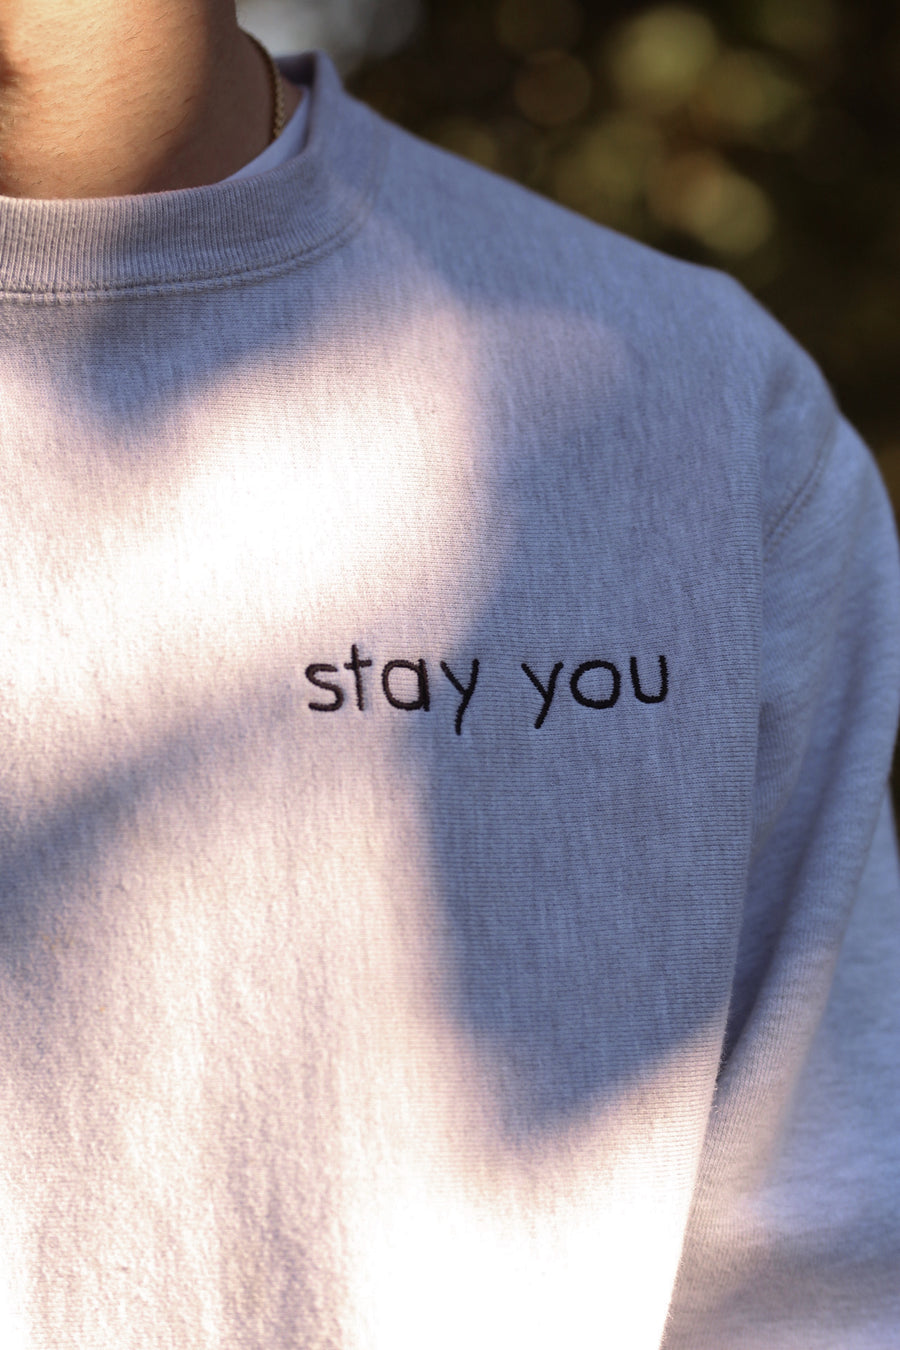 'Stay You®' Crewnecks